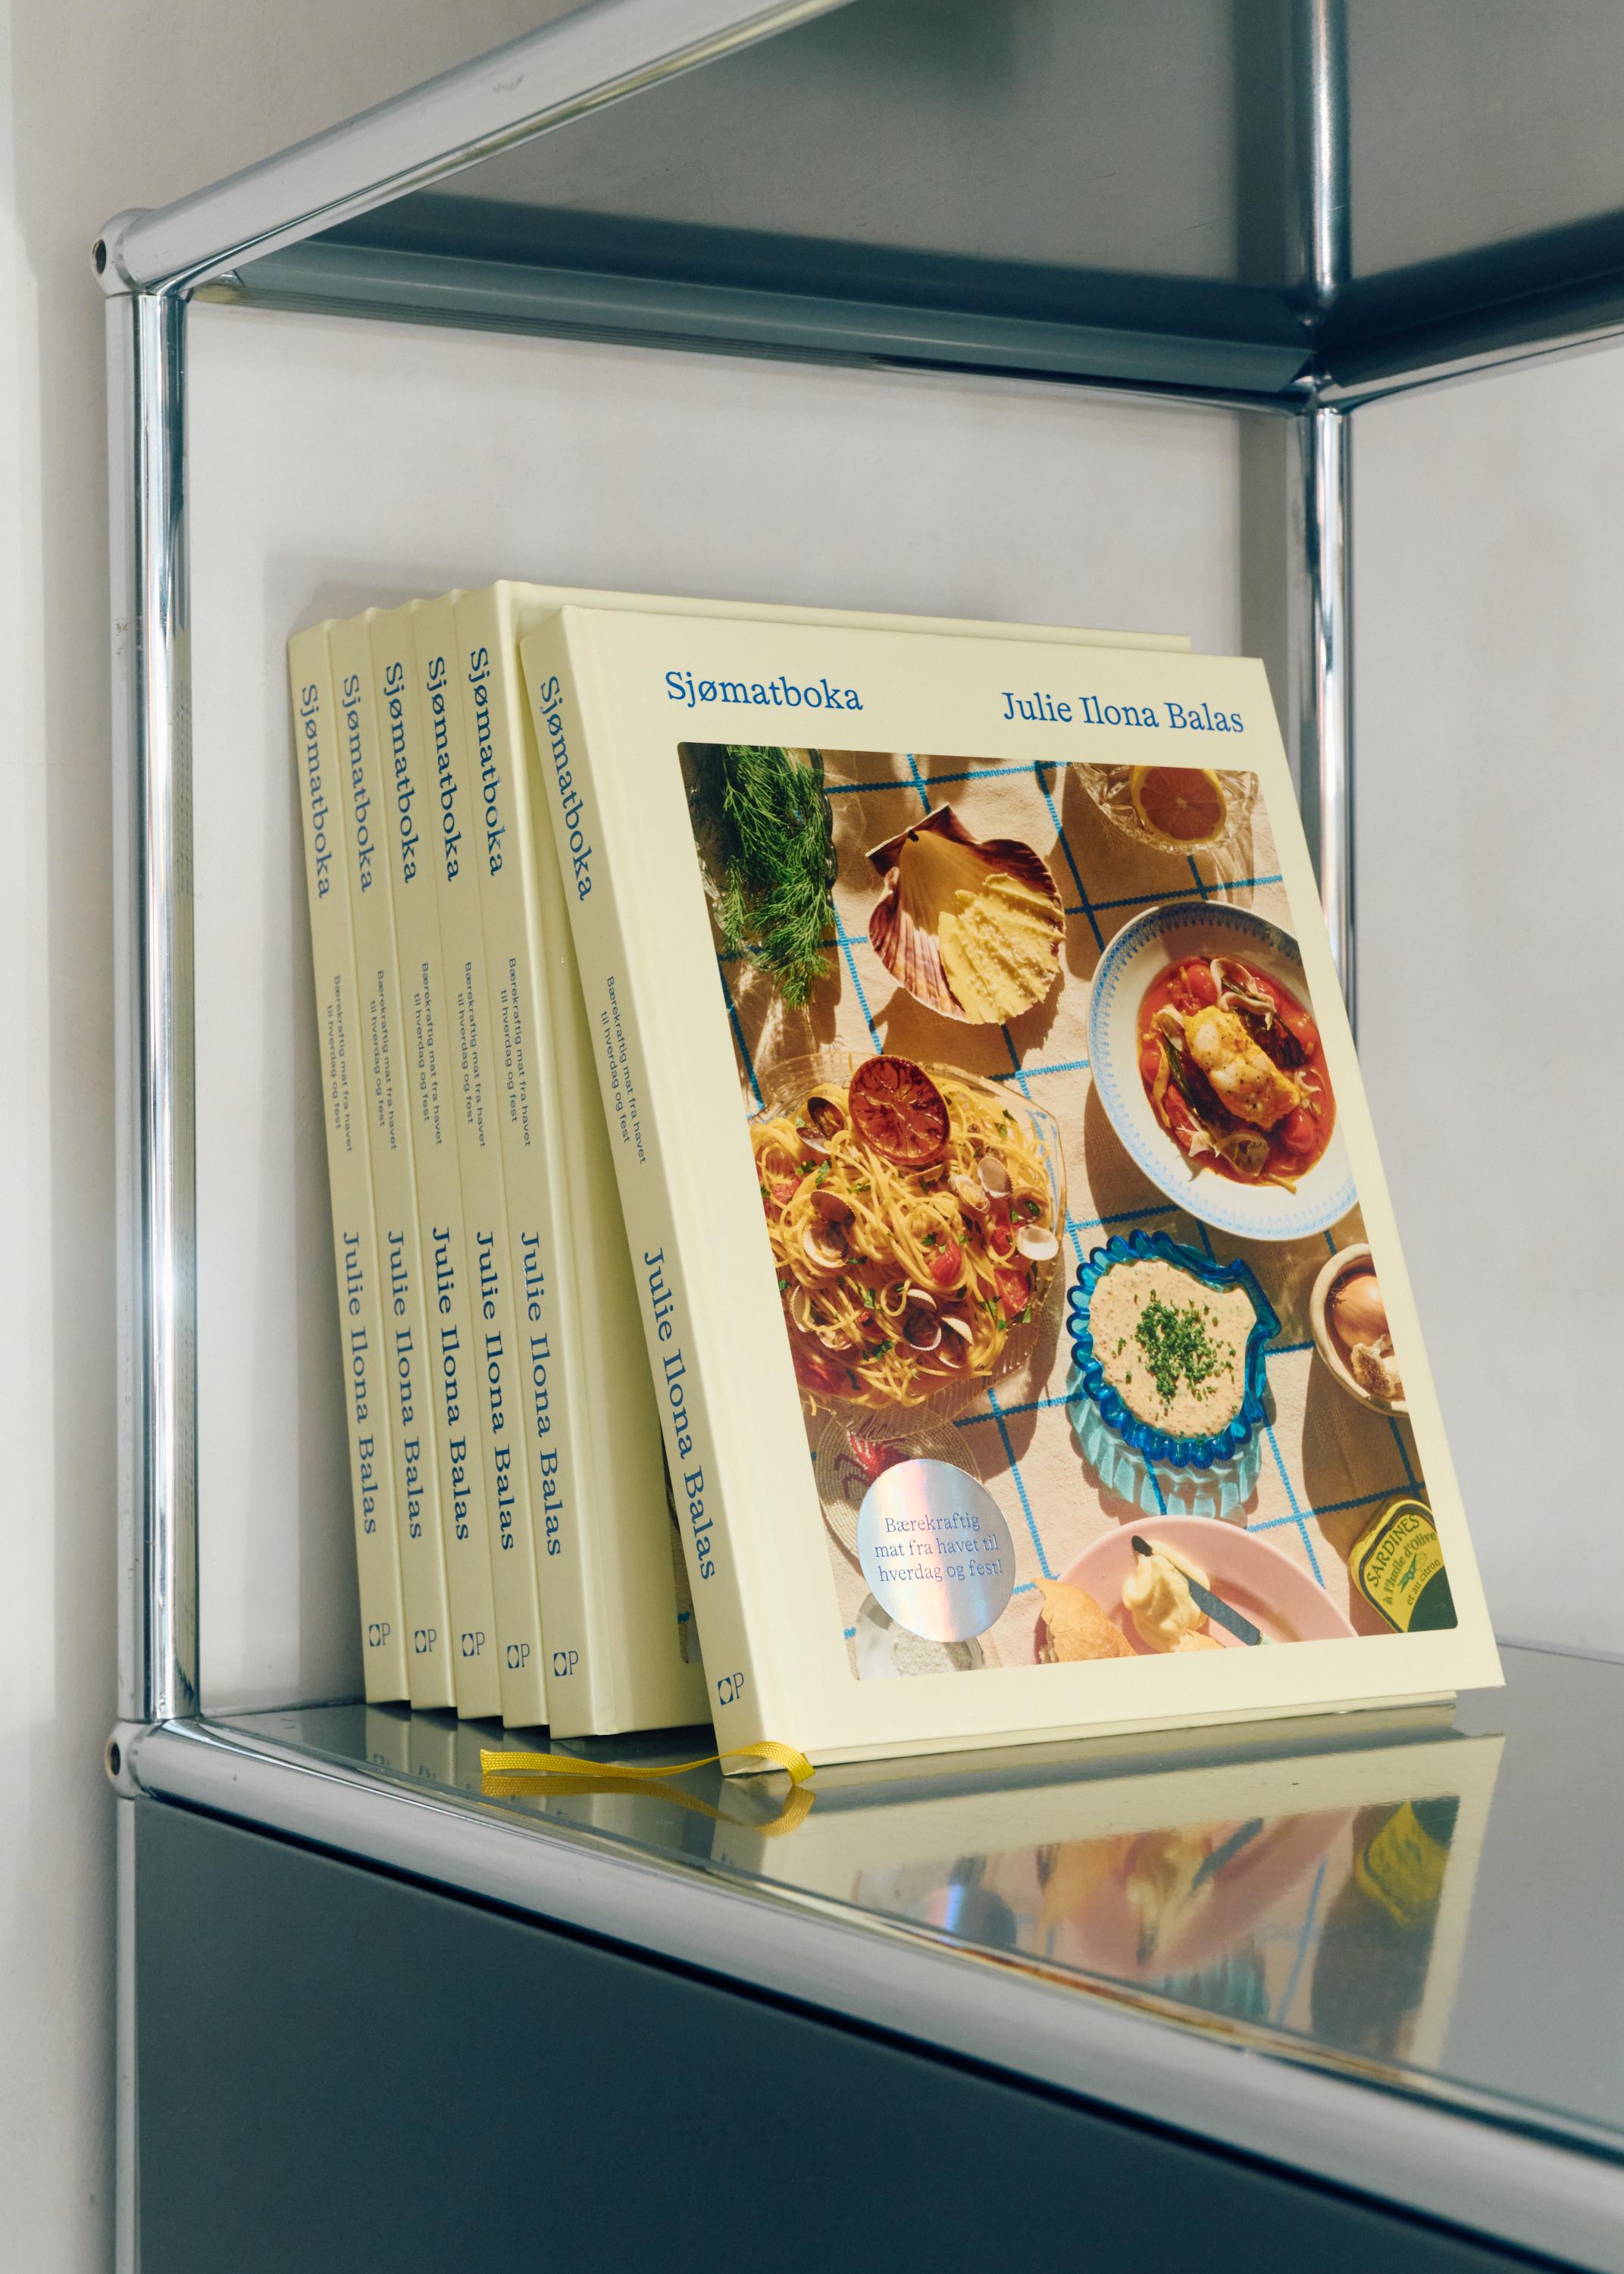 Photos of a cookbook